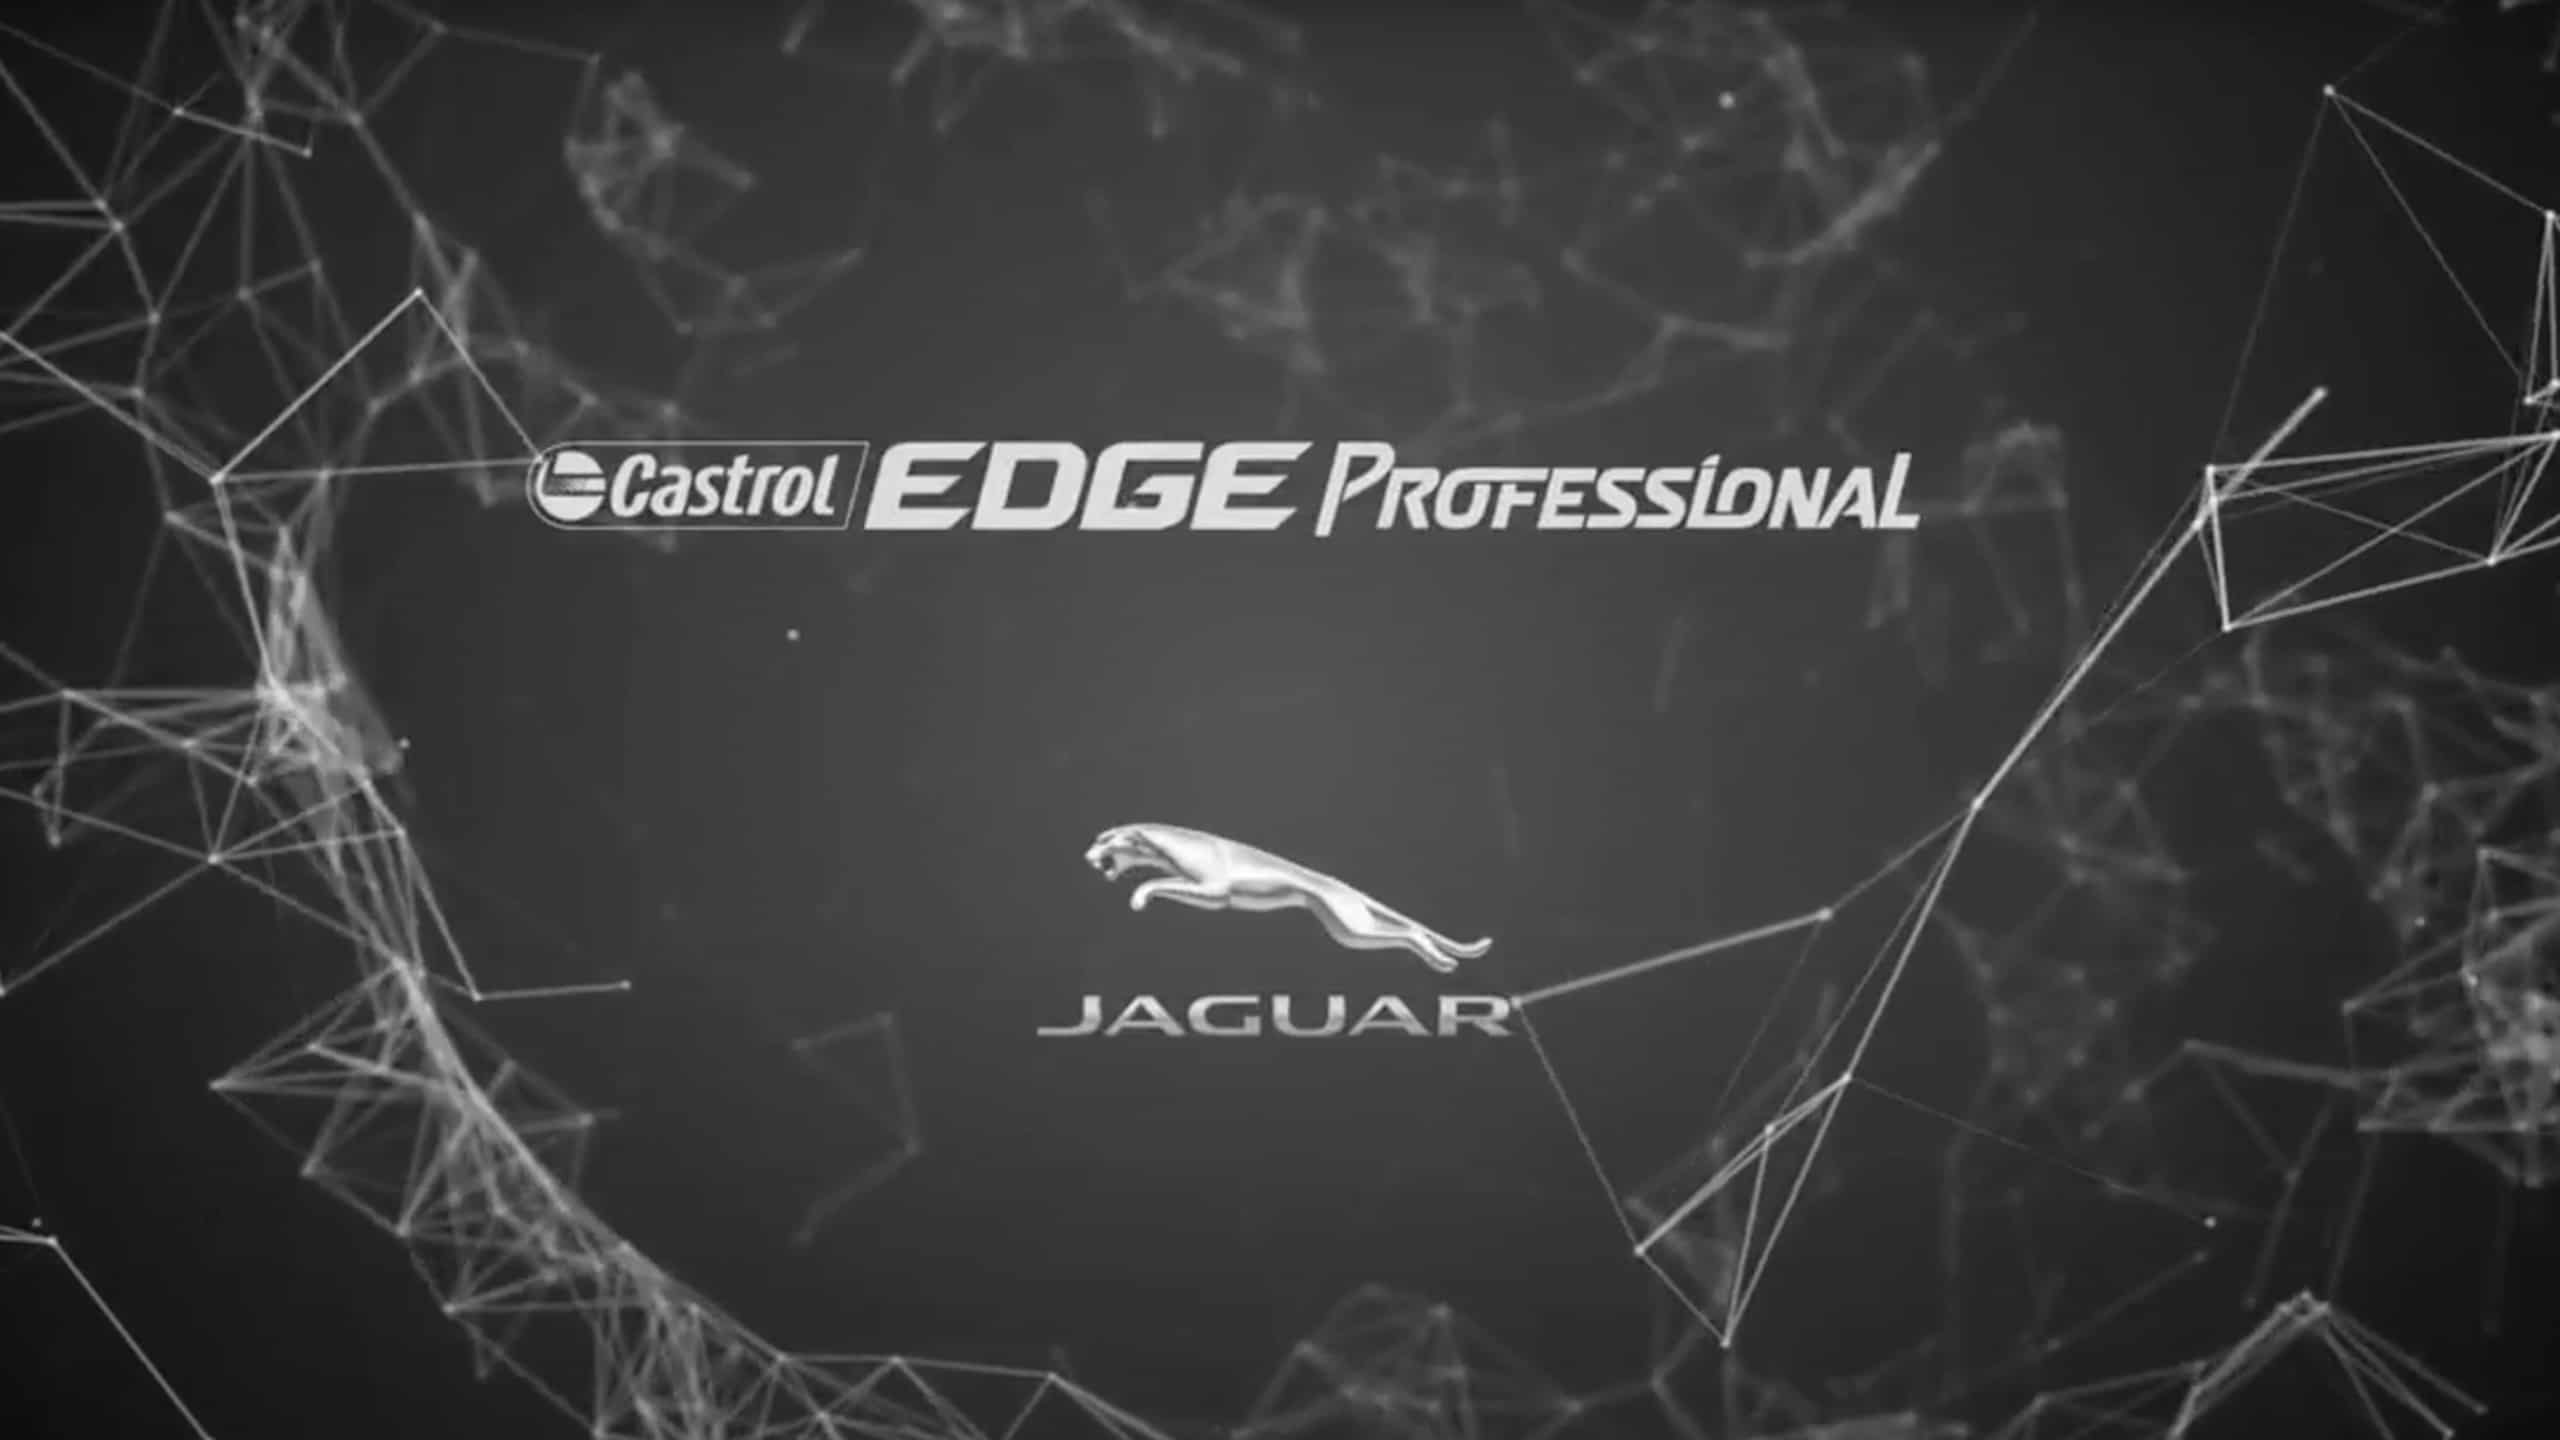 Jaguar Castrol edge professional logos